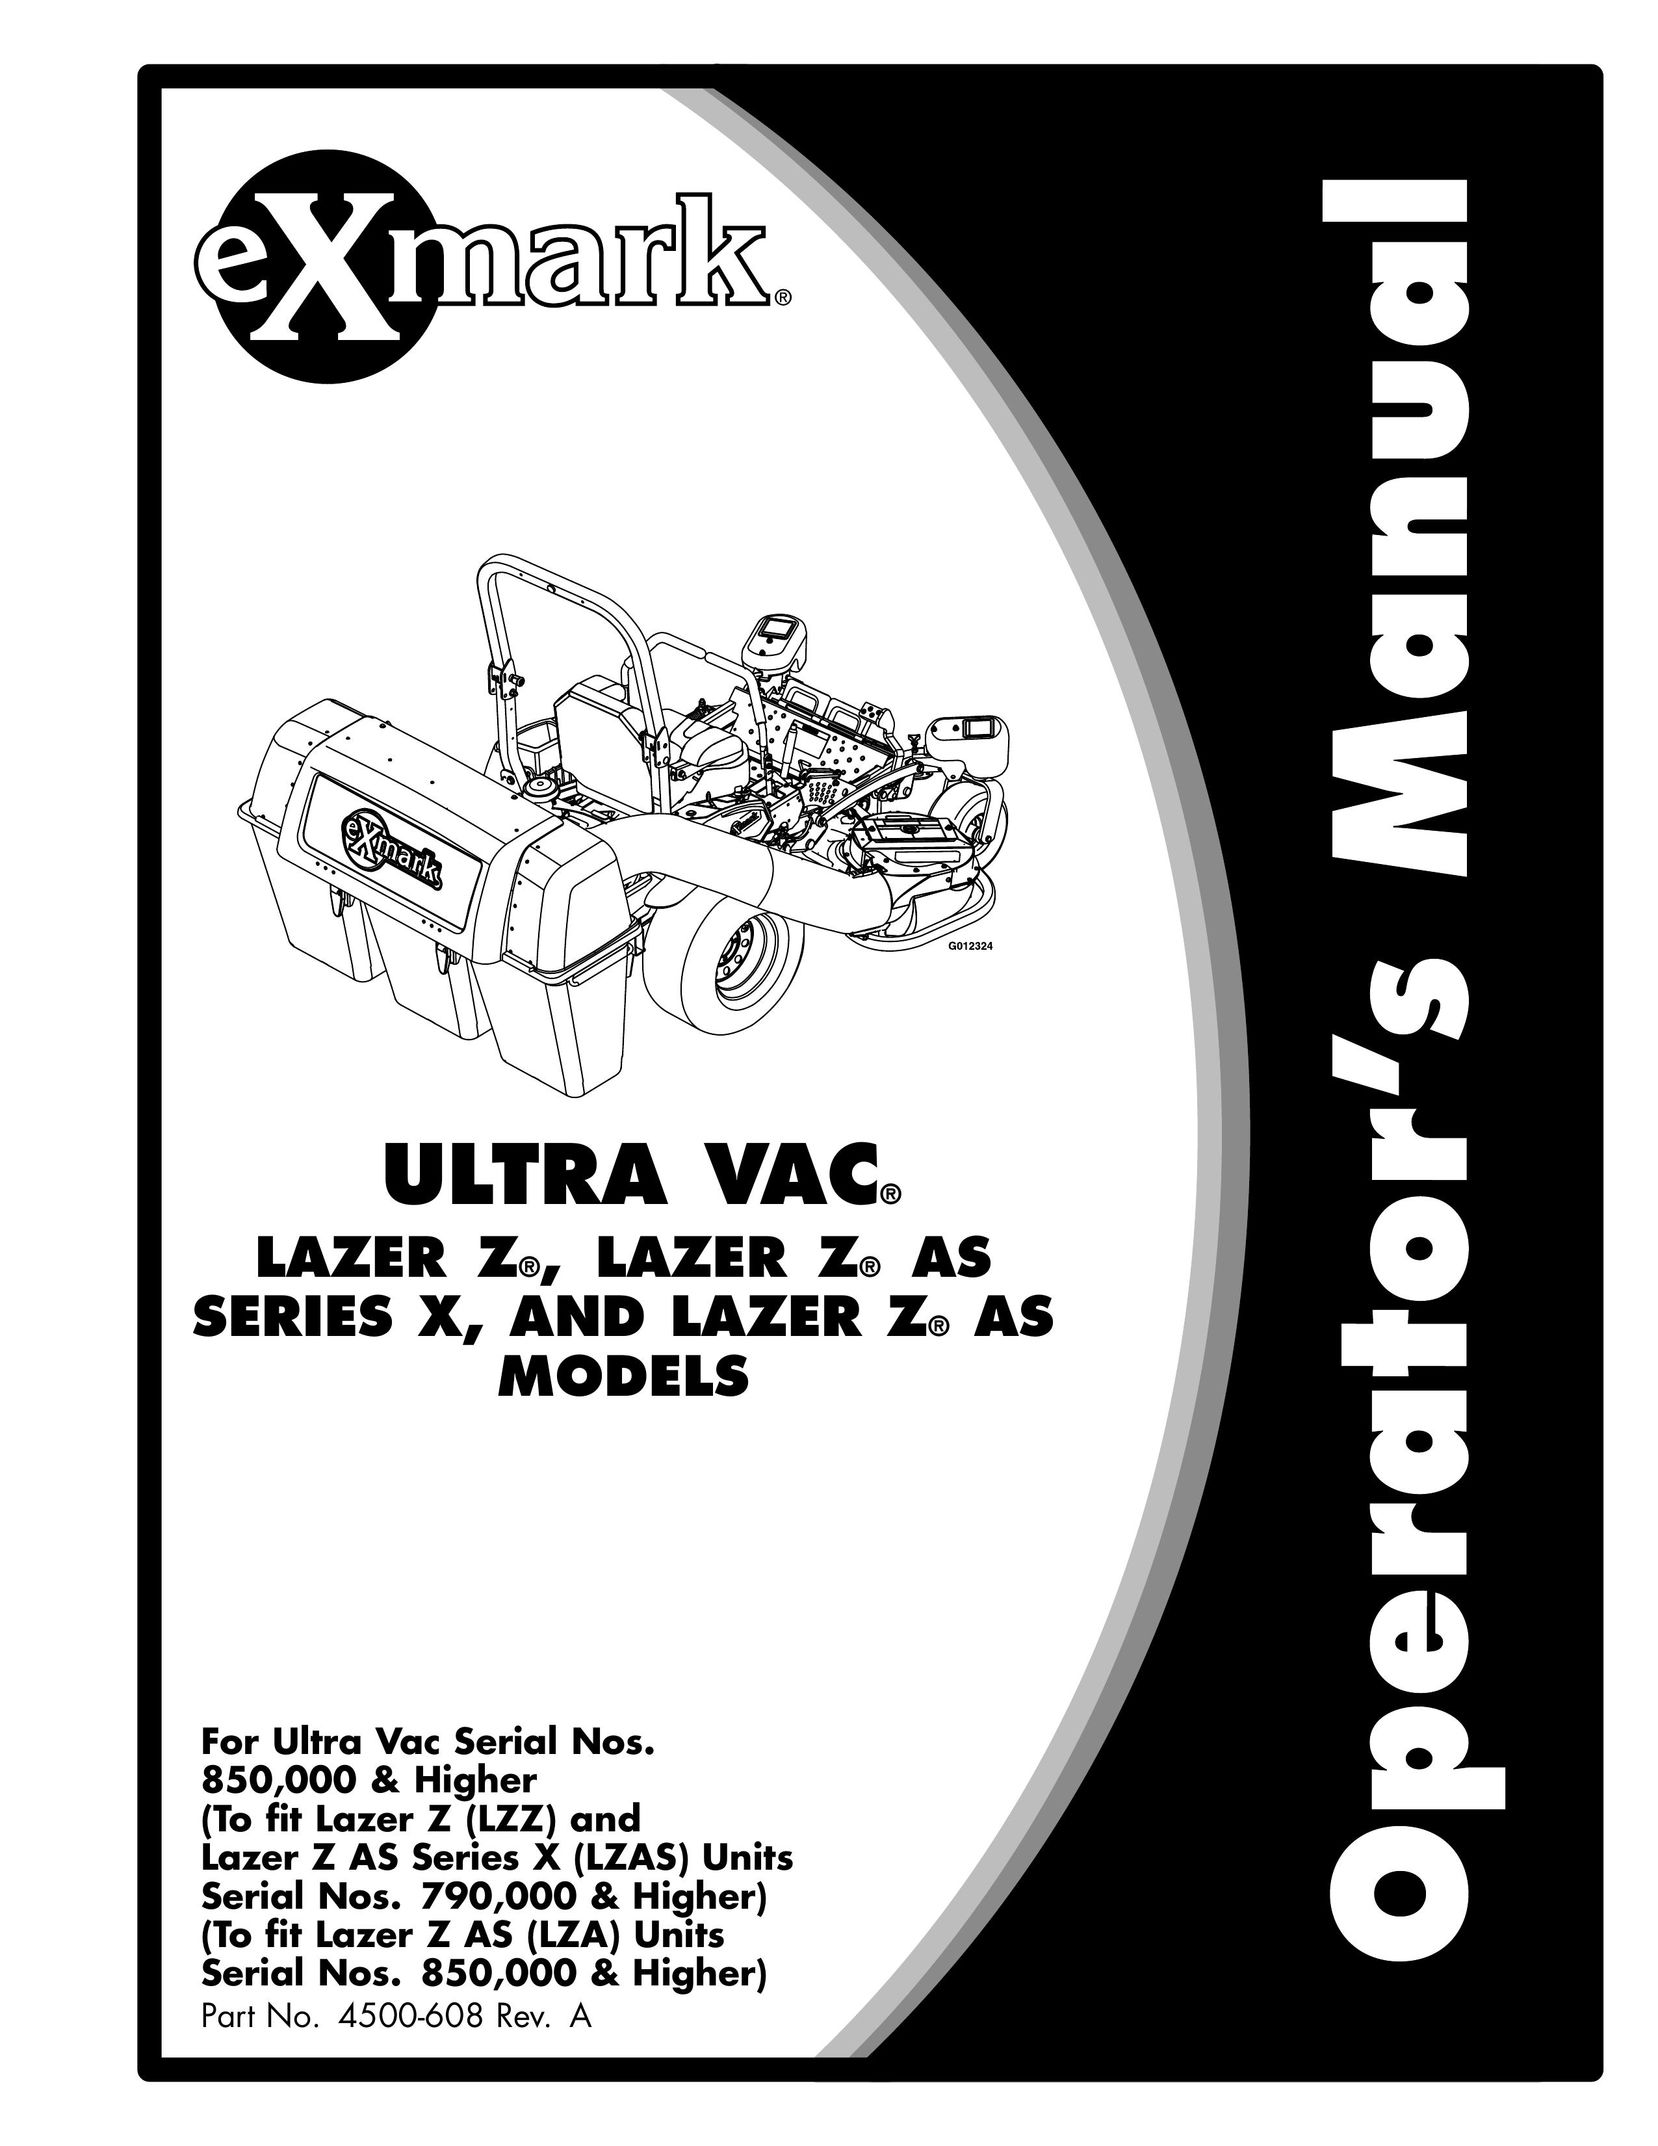 Exmark 850 Vacuum Cleaner User Manual